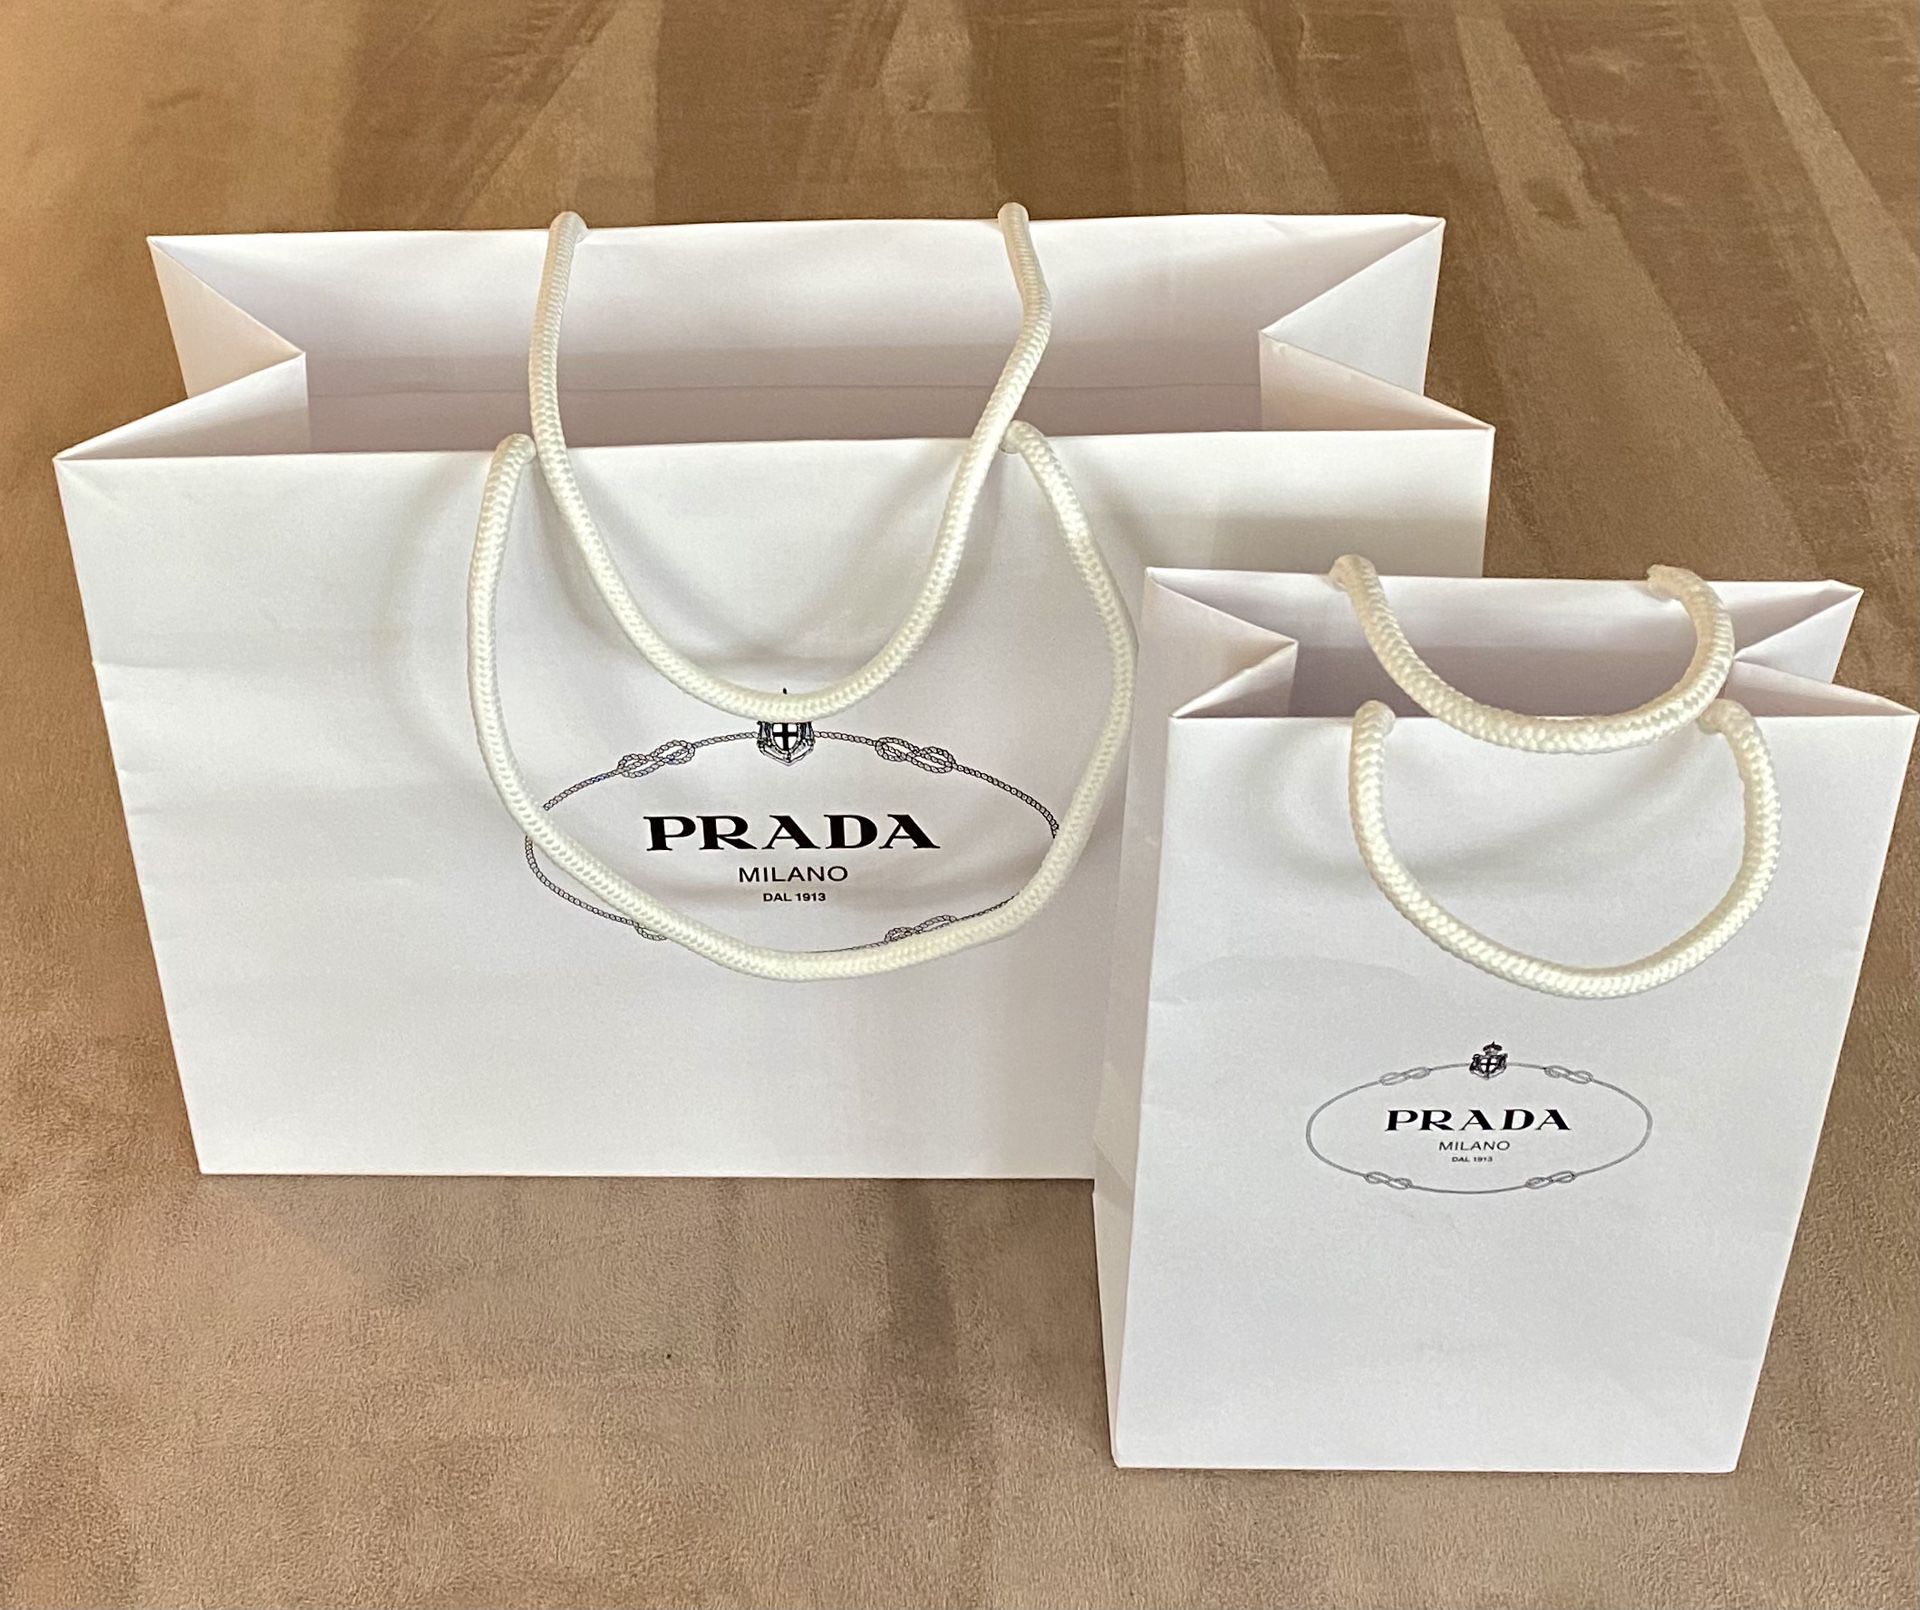 Prada - 2 Shopping Bags 